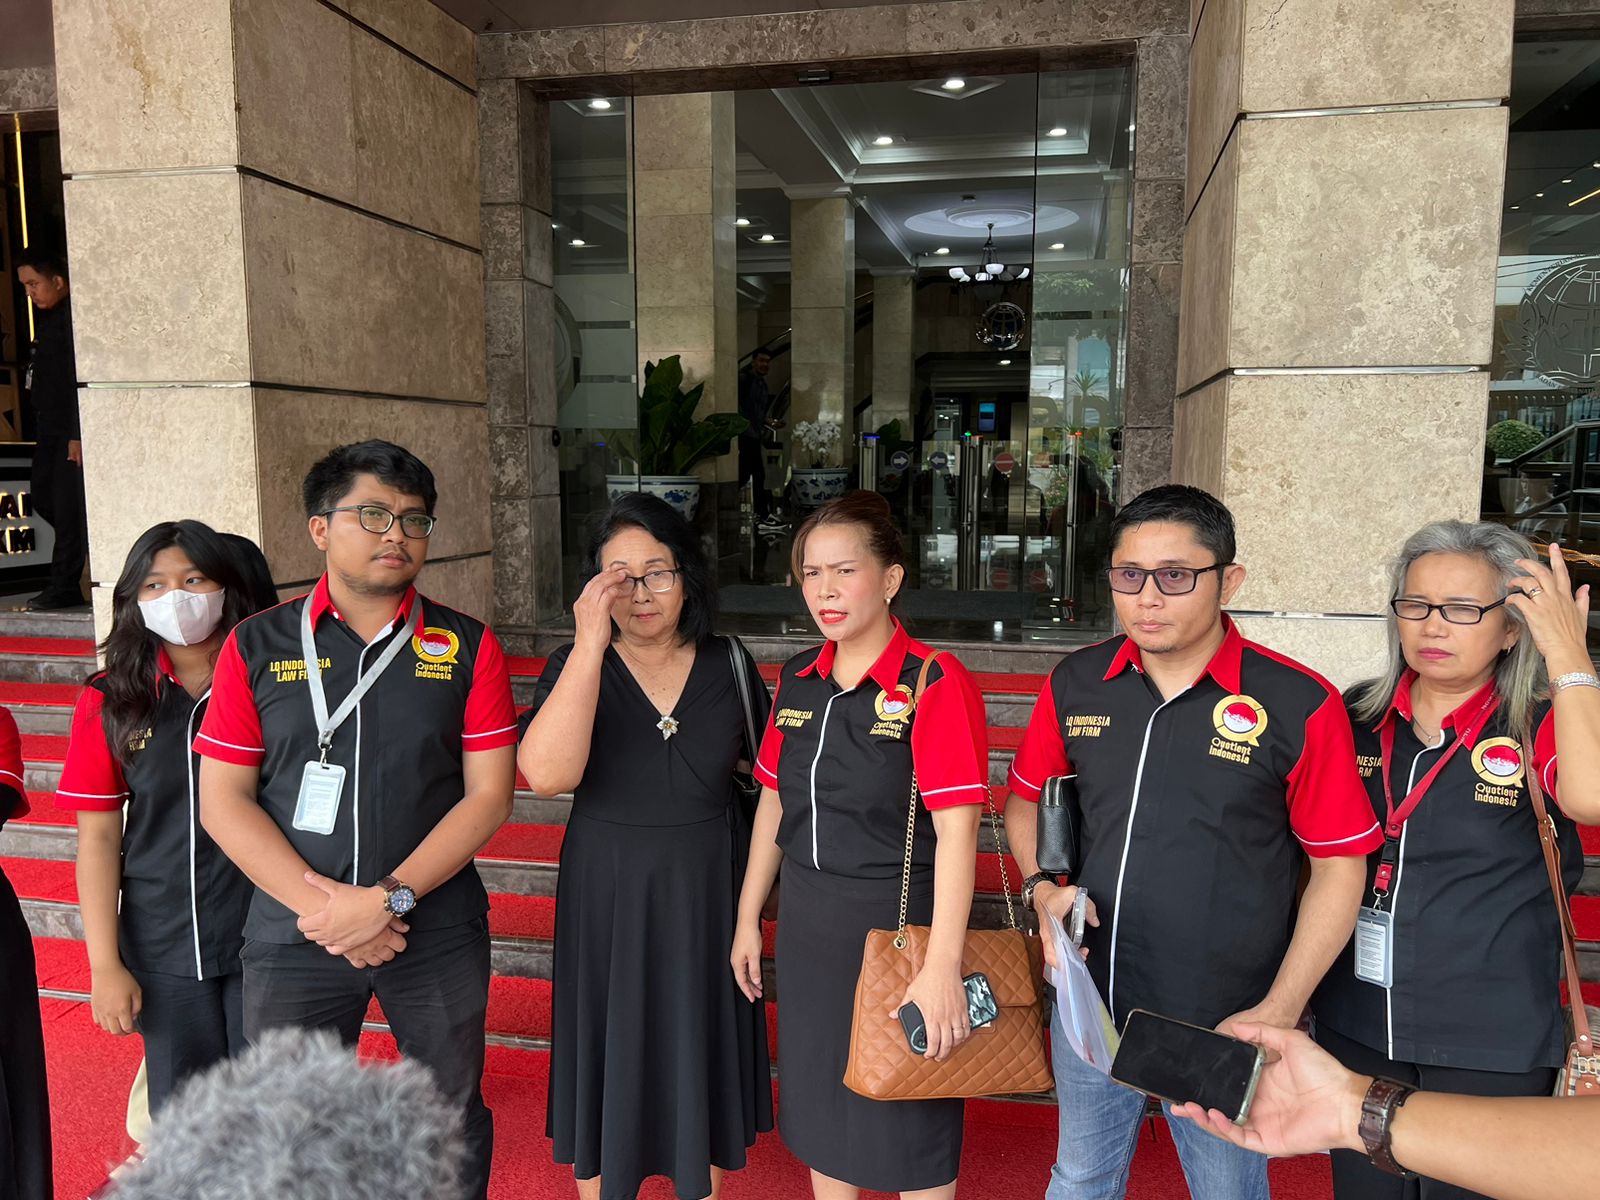 Anak Buah AHY Disinyalir Sindikat Oknum Mafia Tanah, Mantan Guru Besar IPB Sambangi Kementerian ATR/BPN